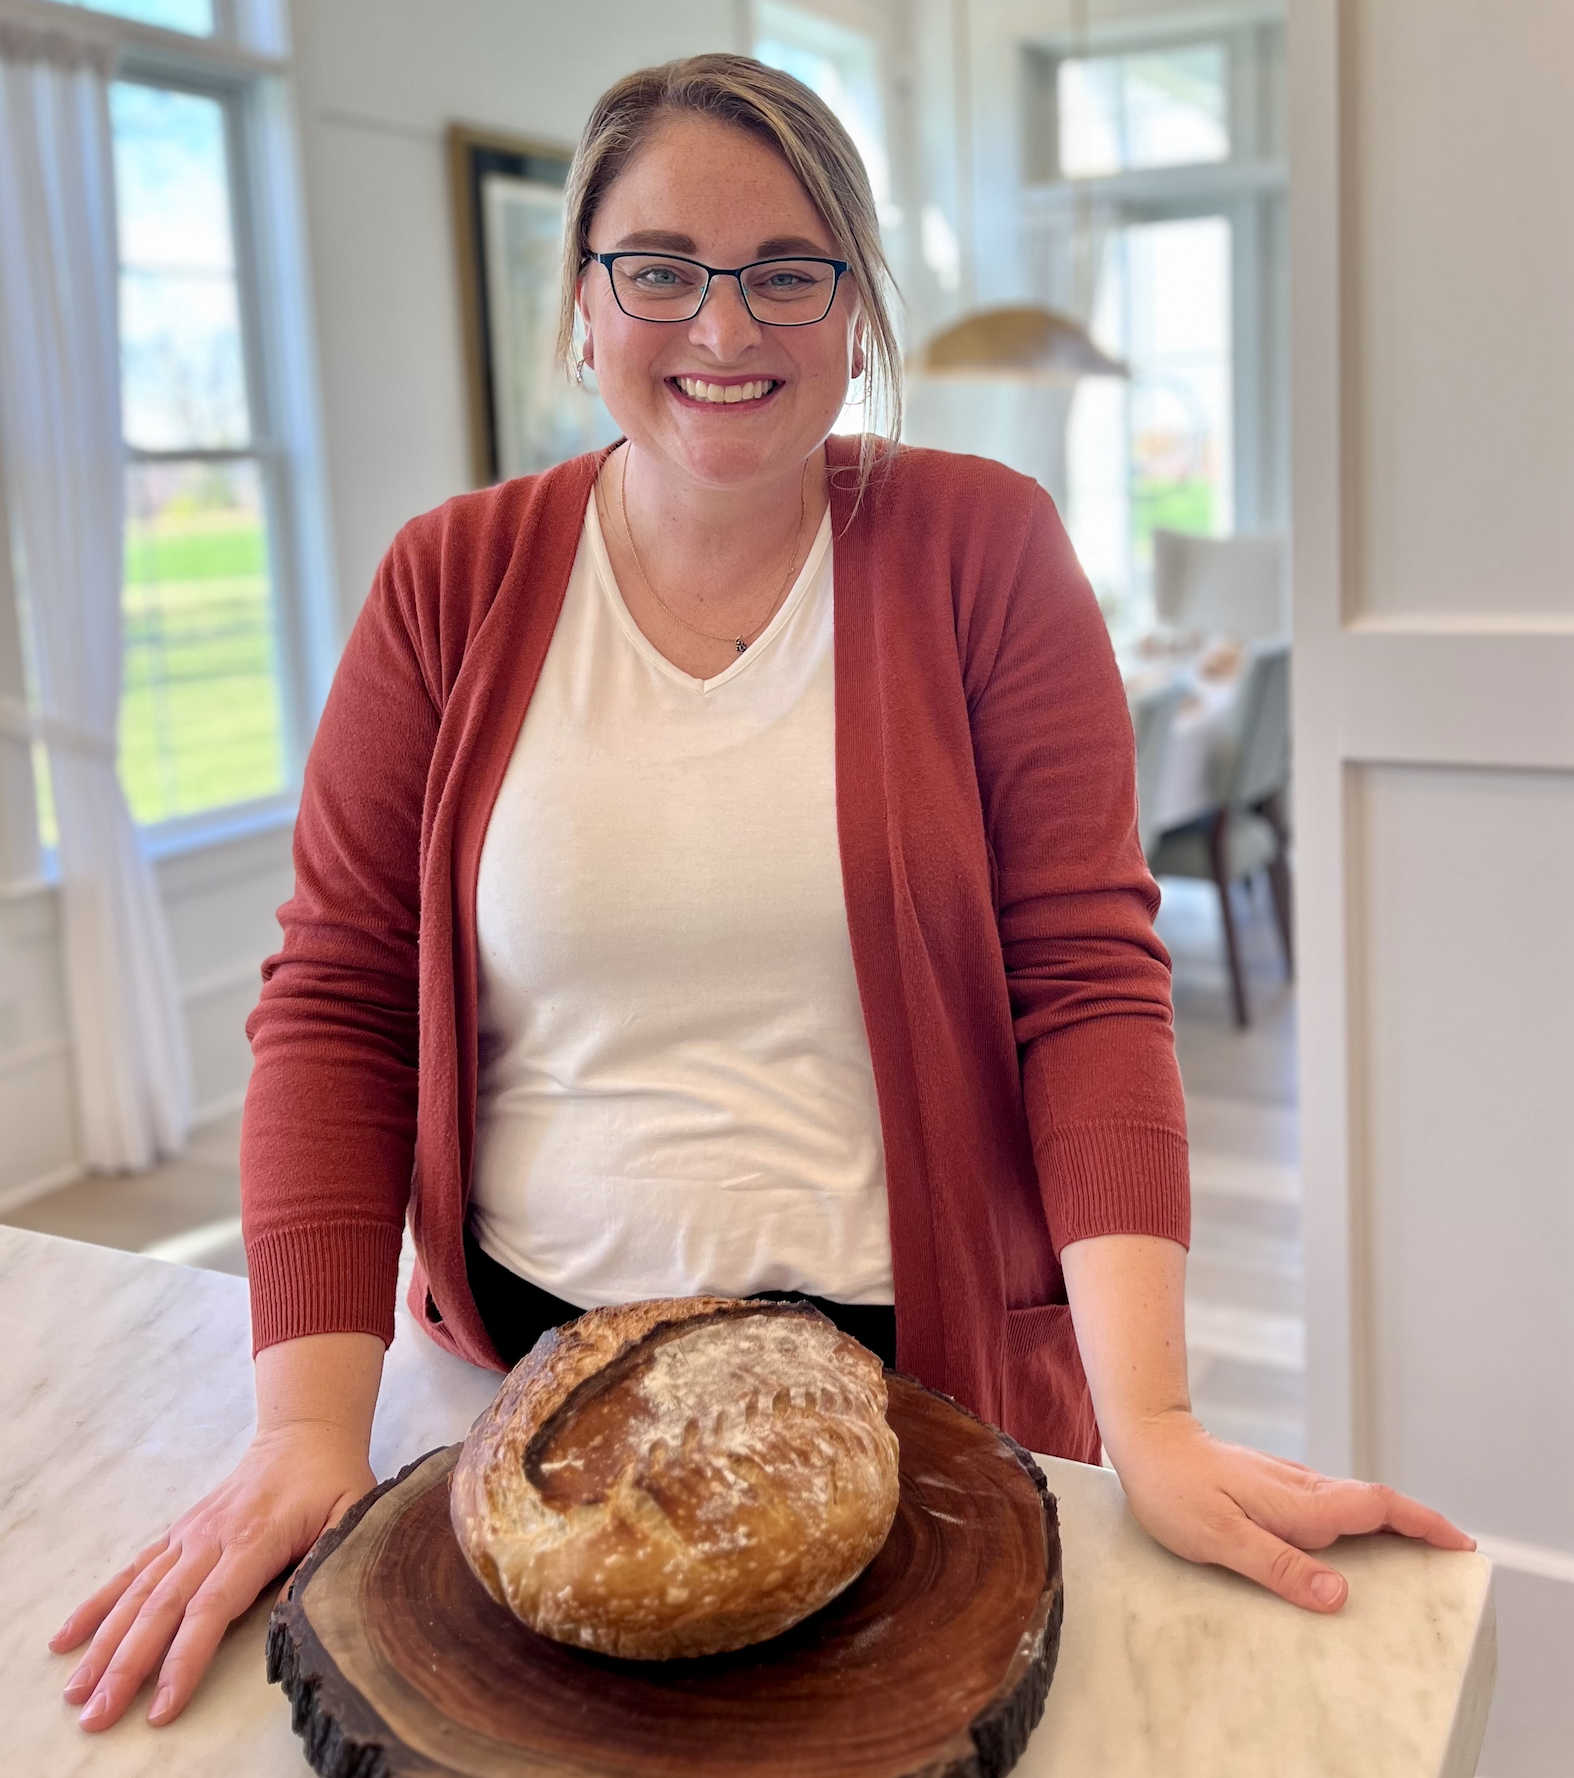 sourdough bread baker recipes classes influencer on social media @amybakesbread in Kentucky United States 4